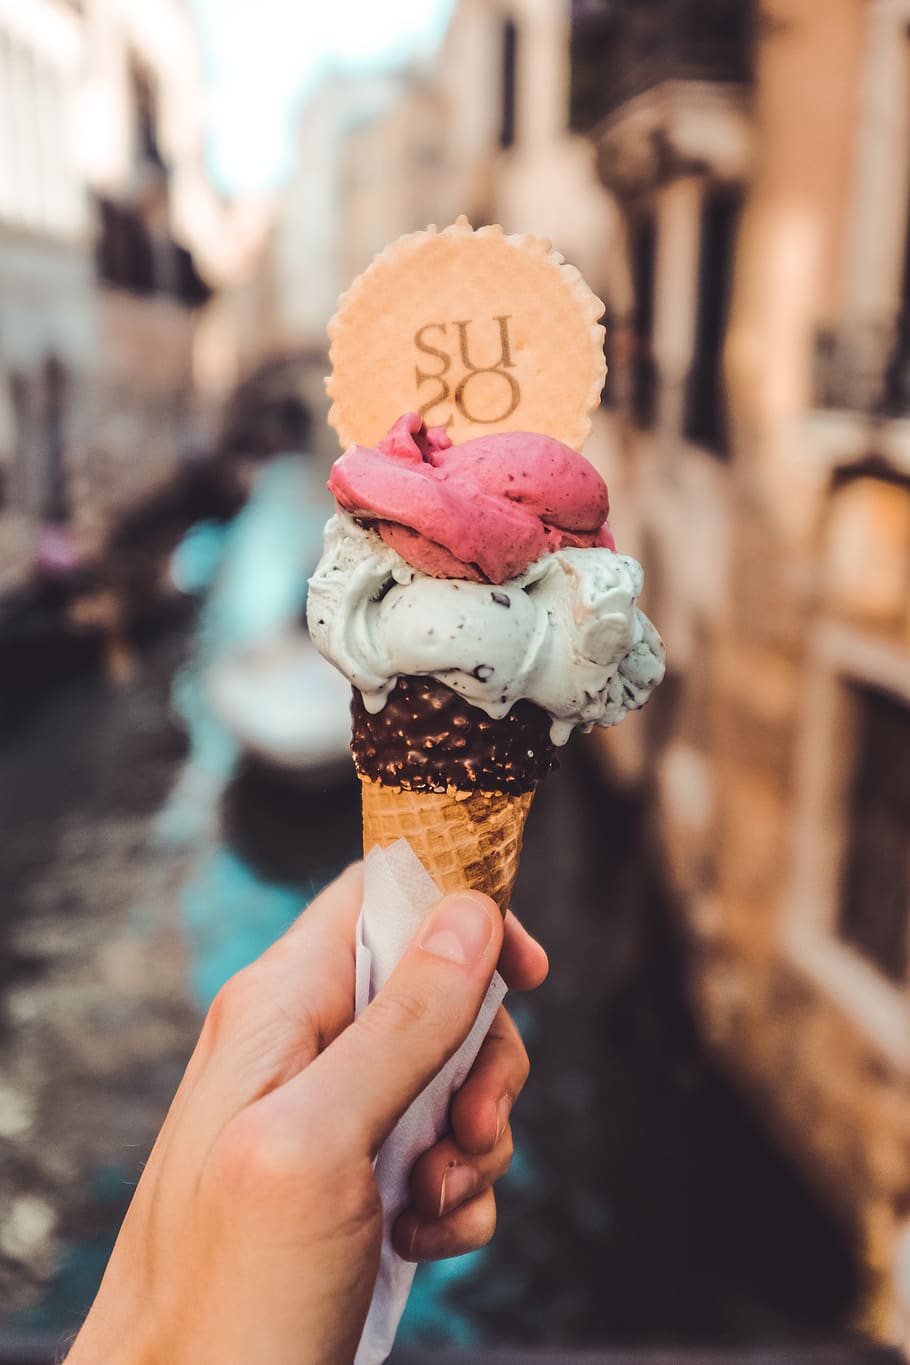 HD Wallpaper: Italy, San Marco, Venezia, Suso, Ice Cream, Cone, Scoops, Summer